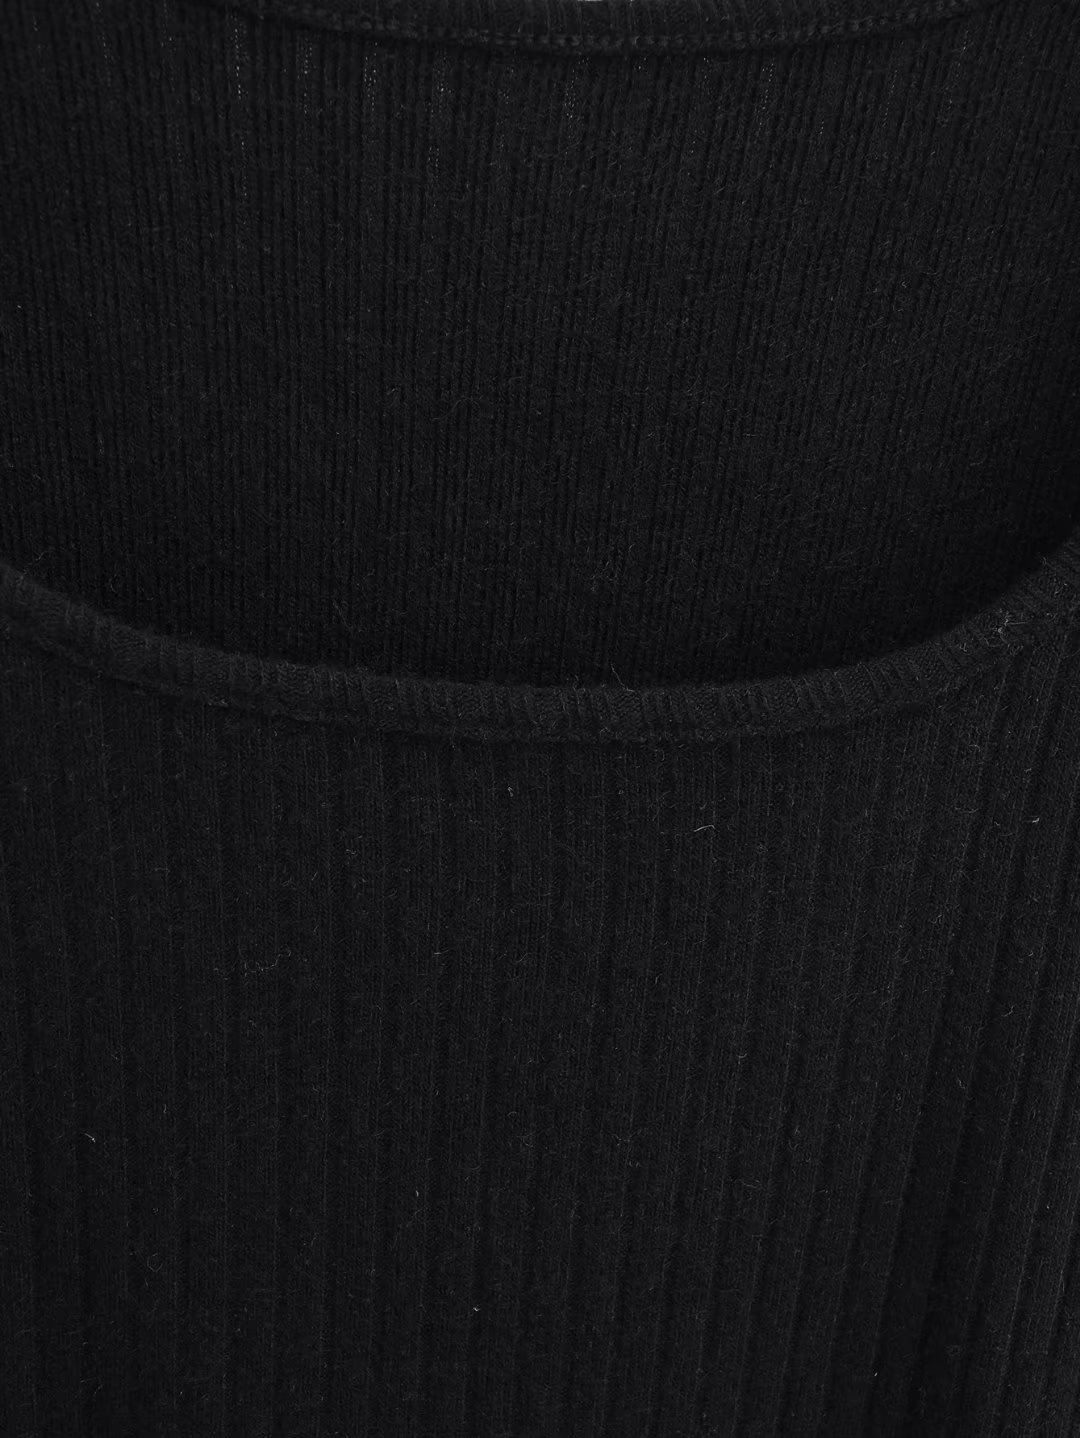 Long Sleeve U Collar Top Sweater - Sweaters - Uniqistic.com